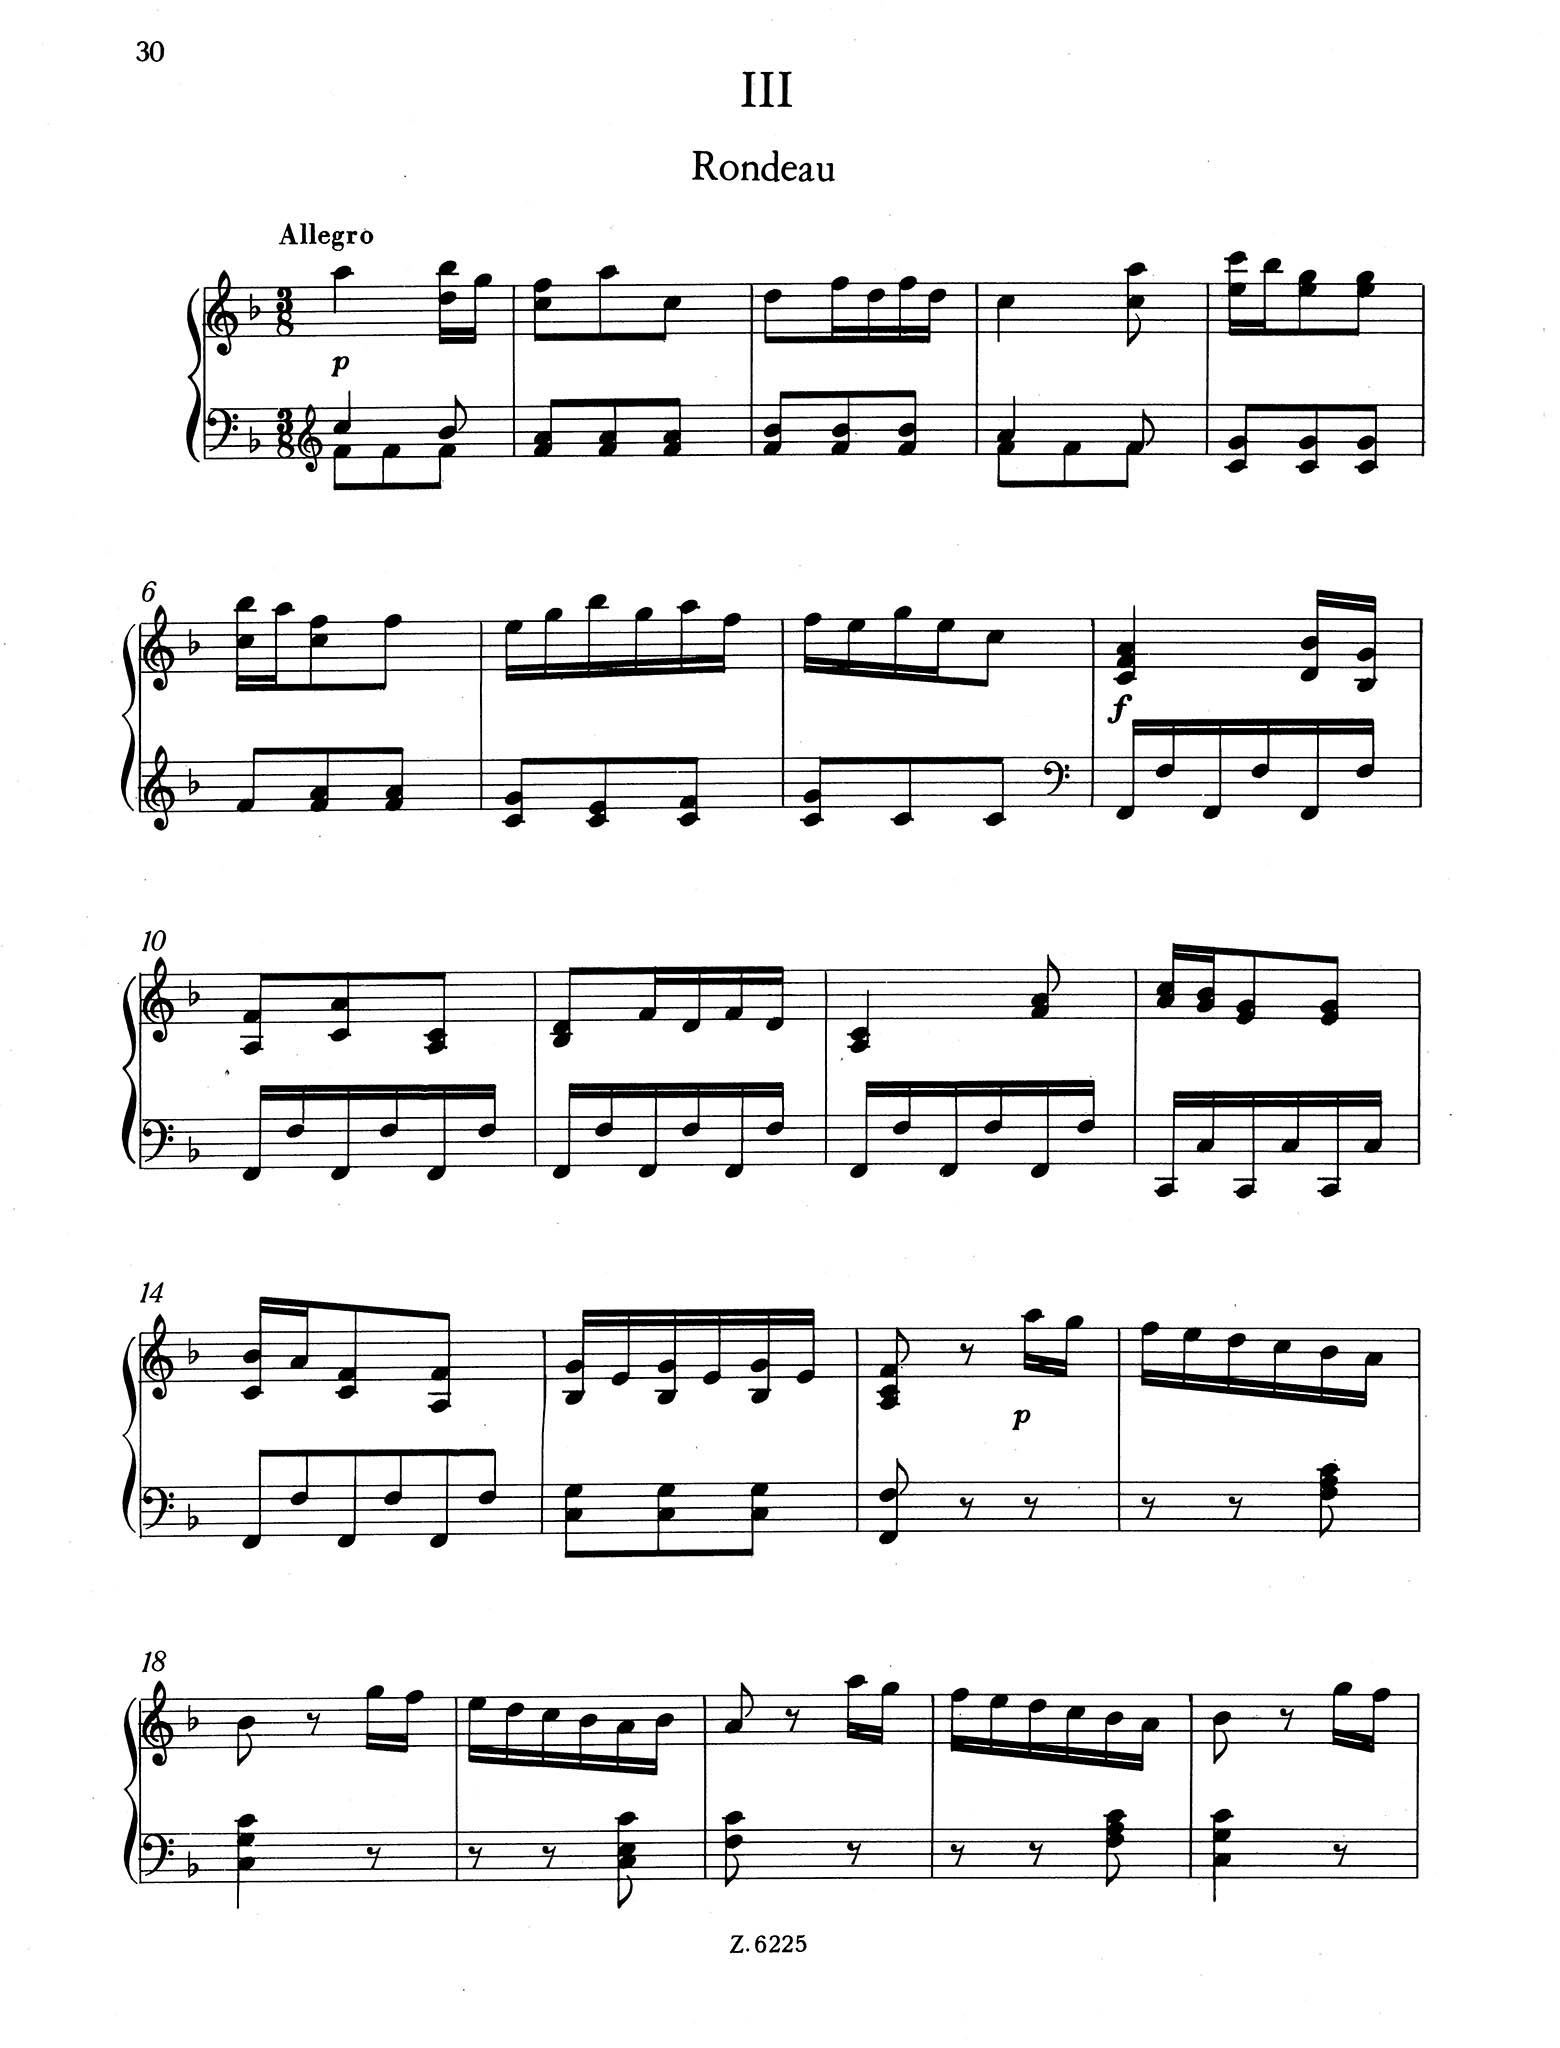 Clarinet Concerto No. 1 (Kaiser) in F Major - Movement 3